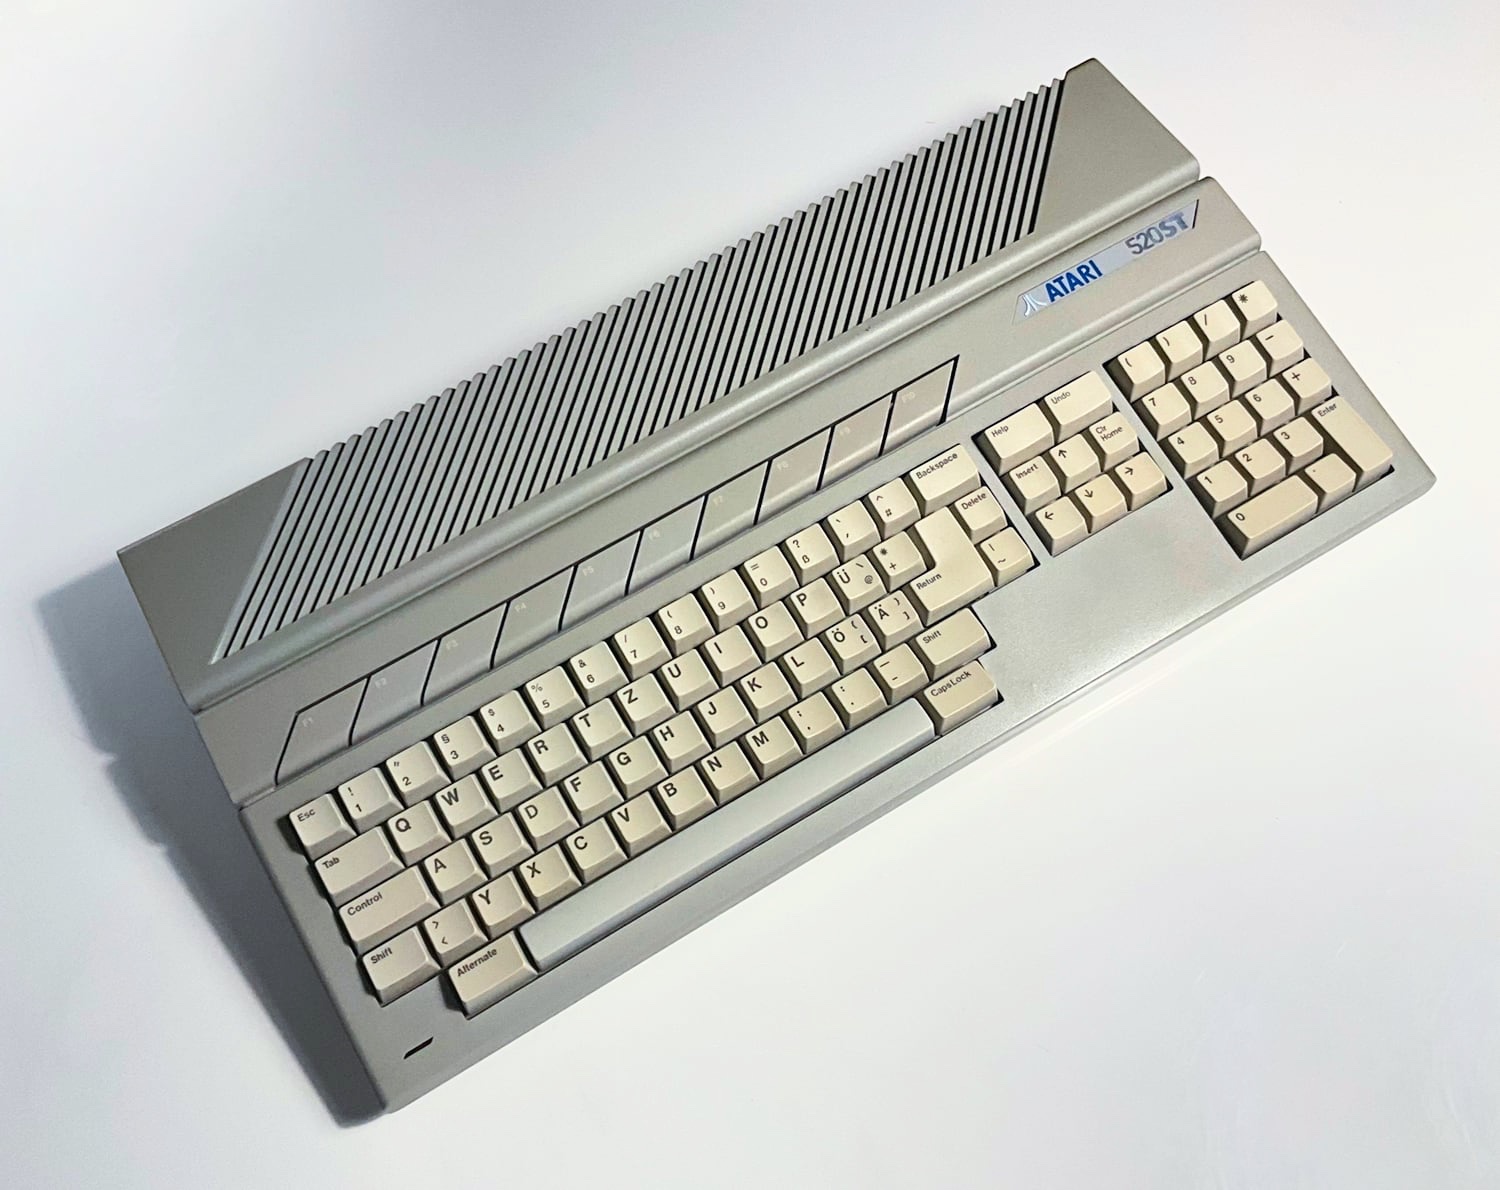 The Atari 520ST